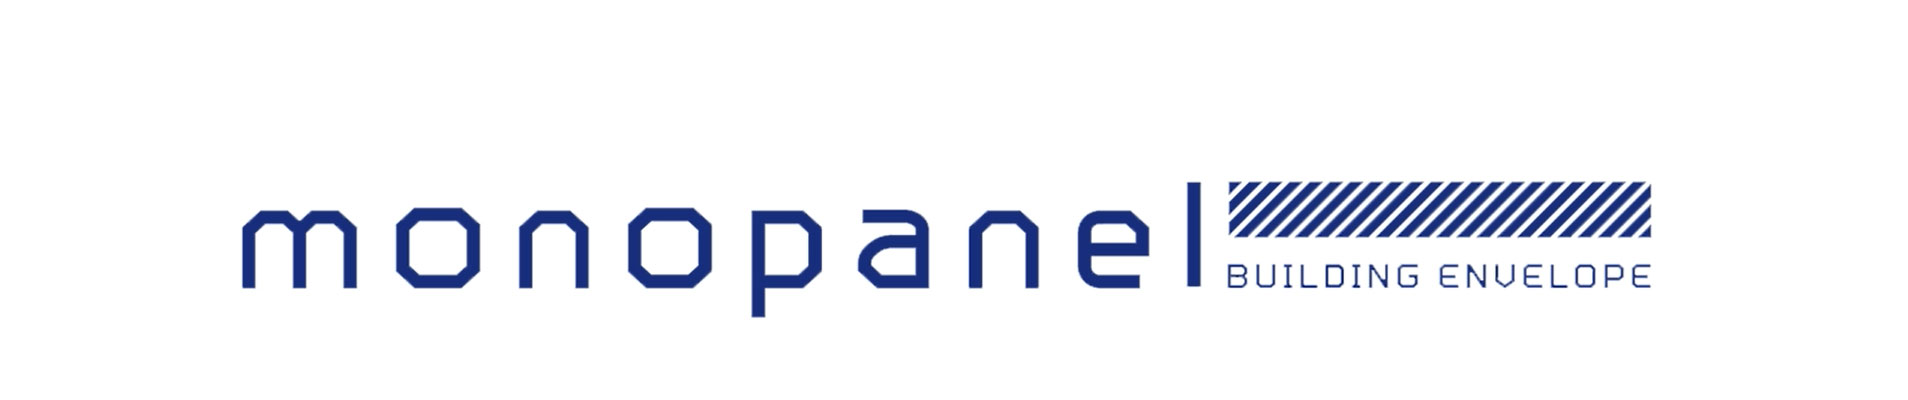 monopanel logo